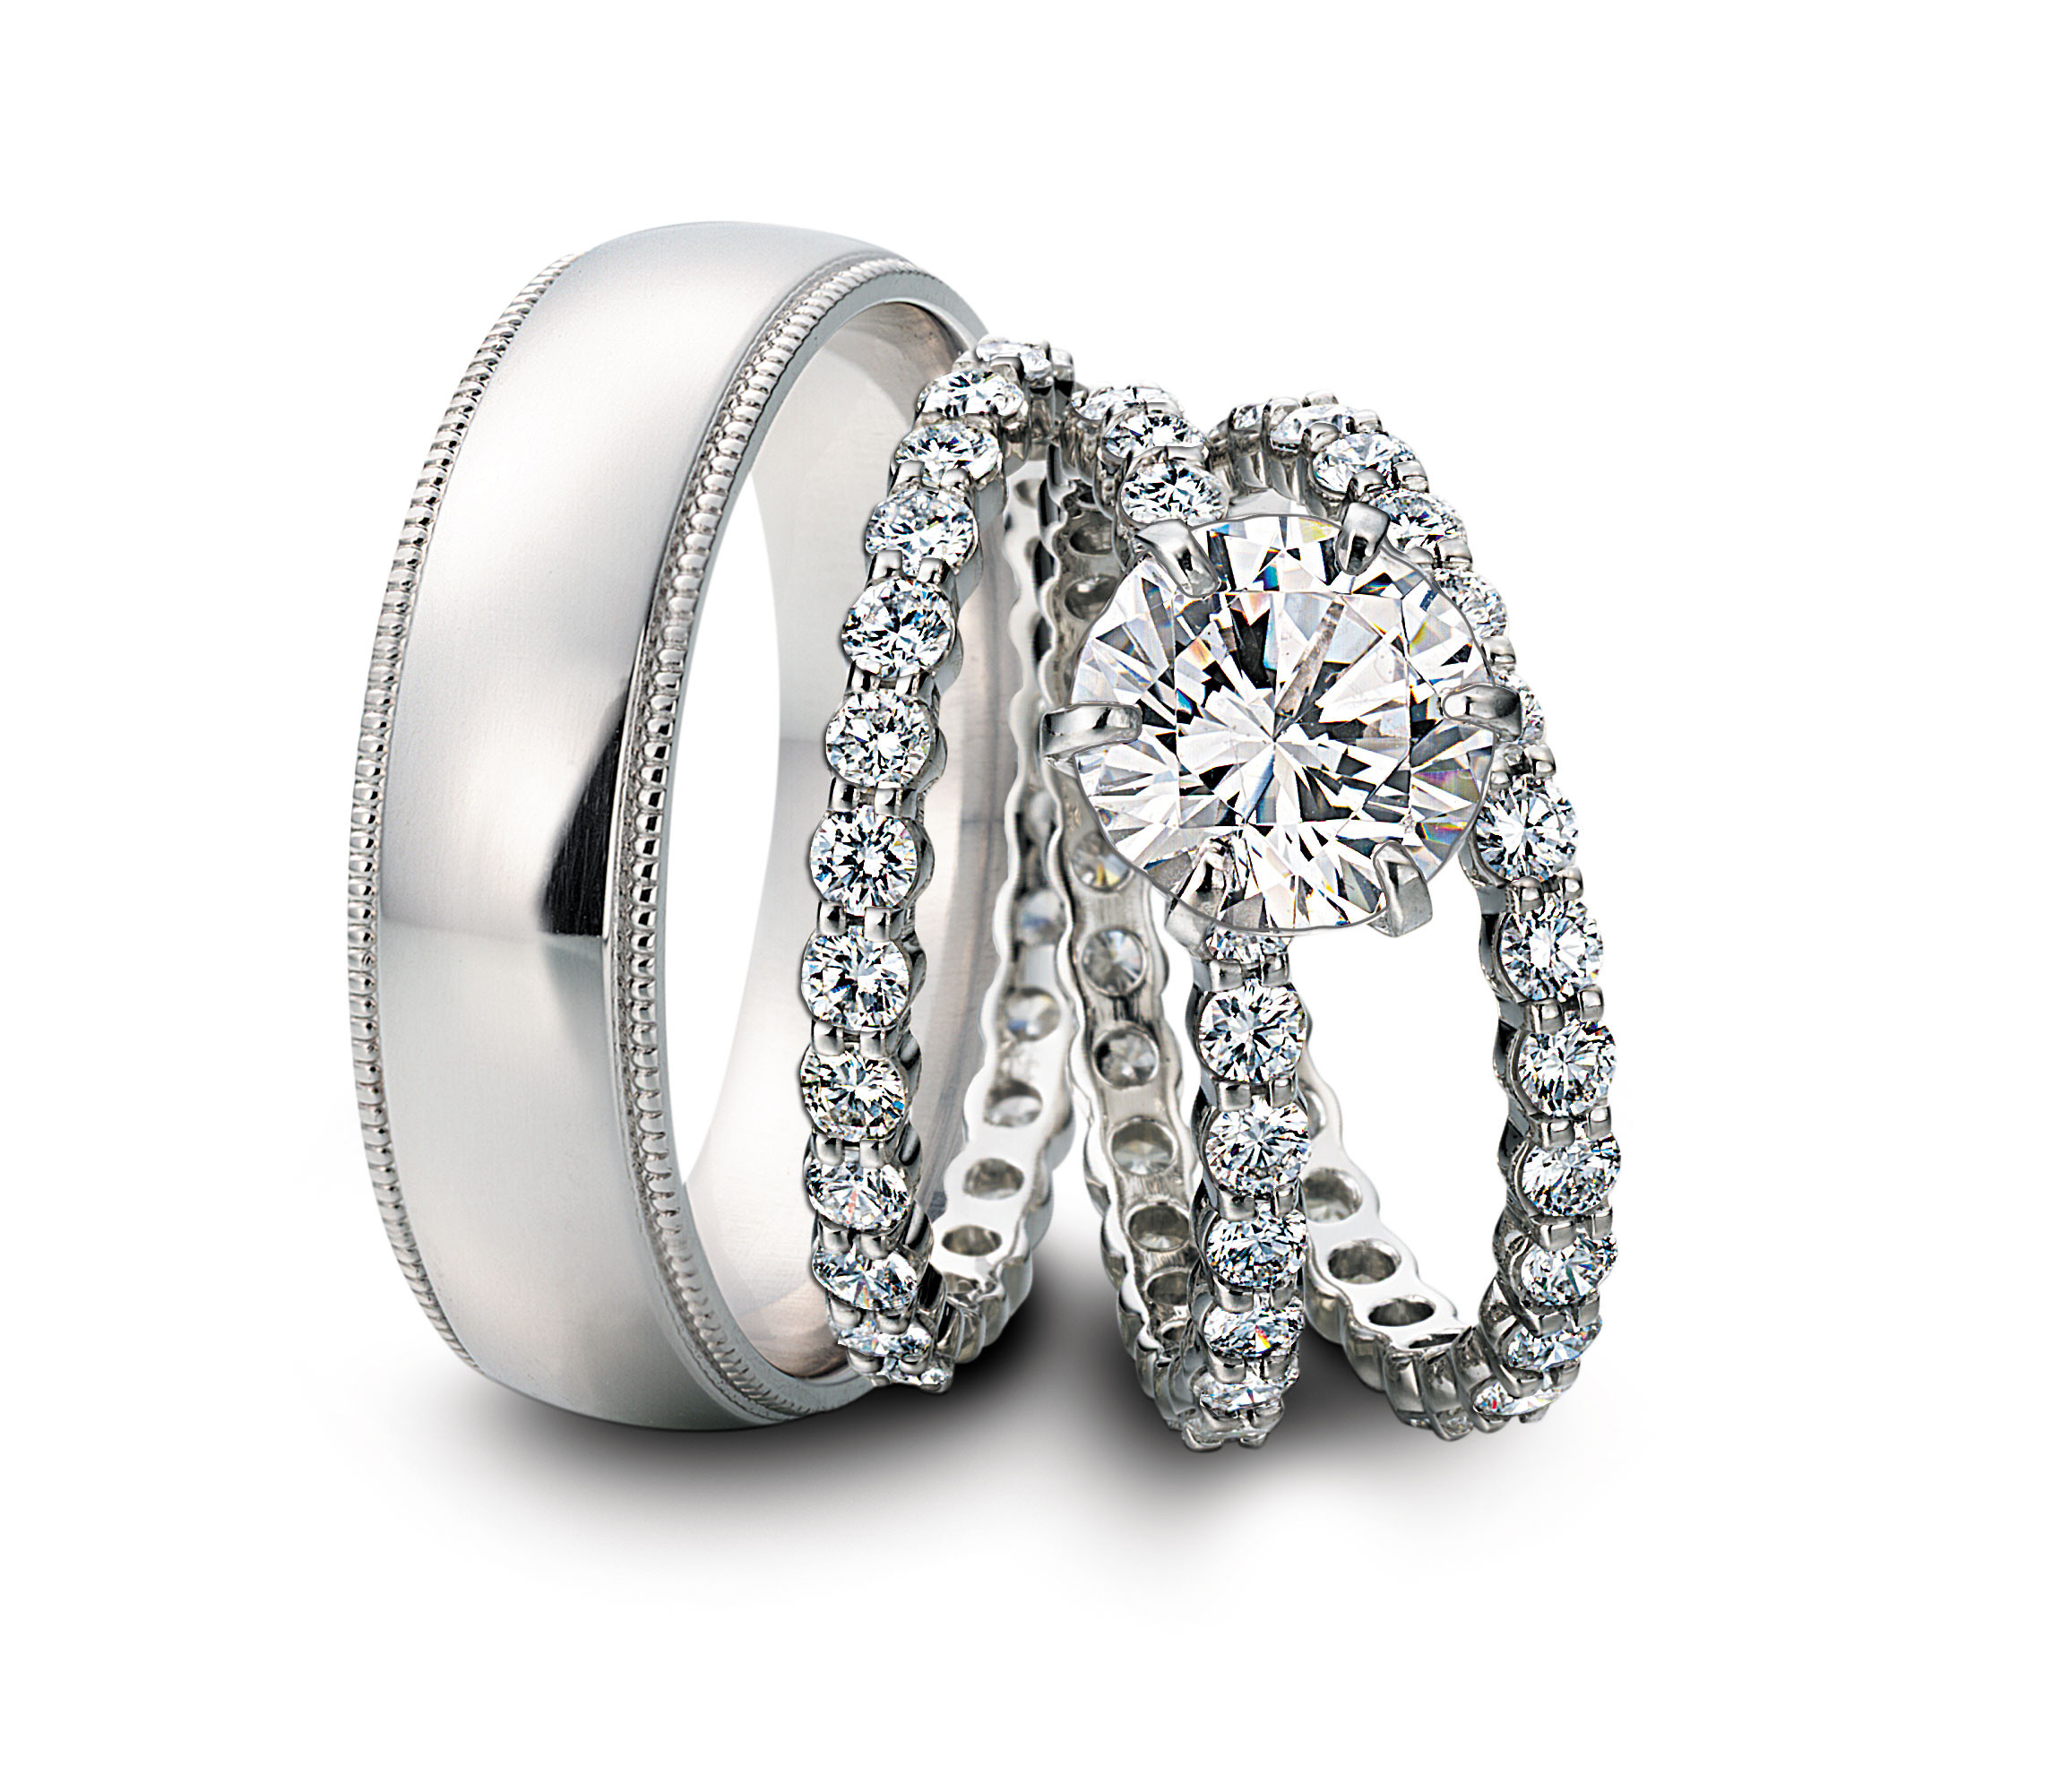 Matching Wedding Ring Sets
 Should my wedding band be platinum or gold